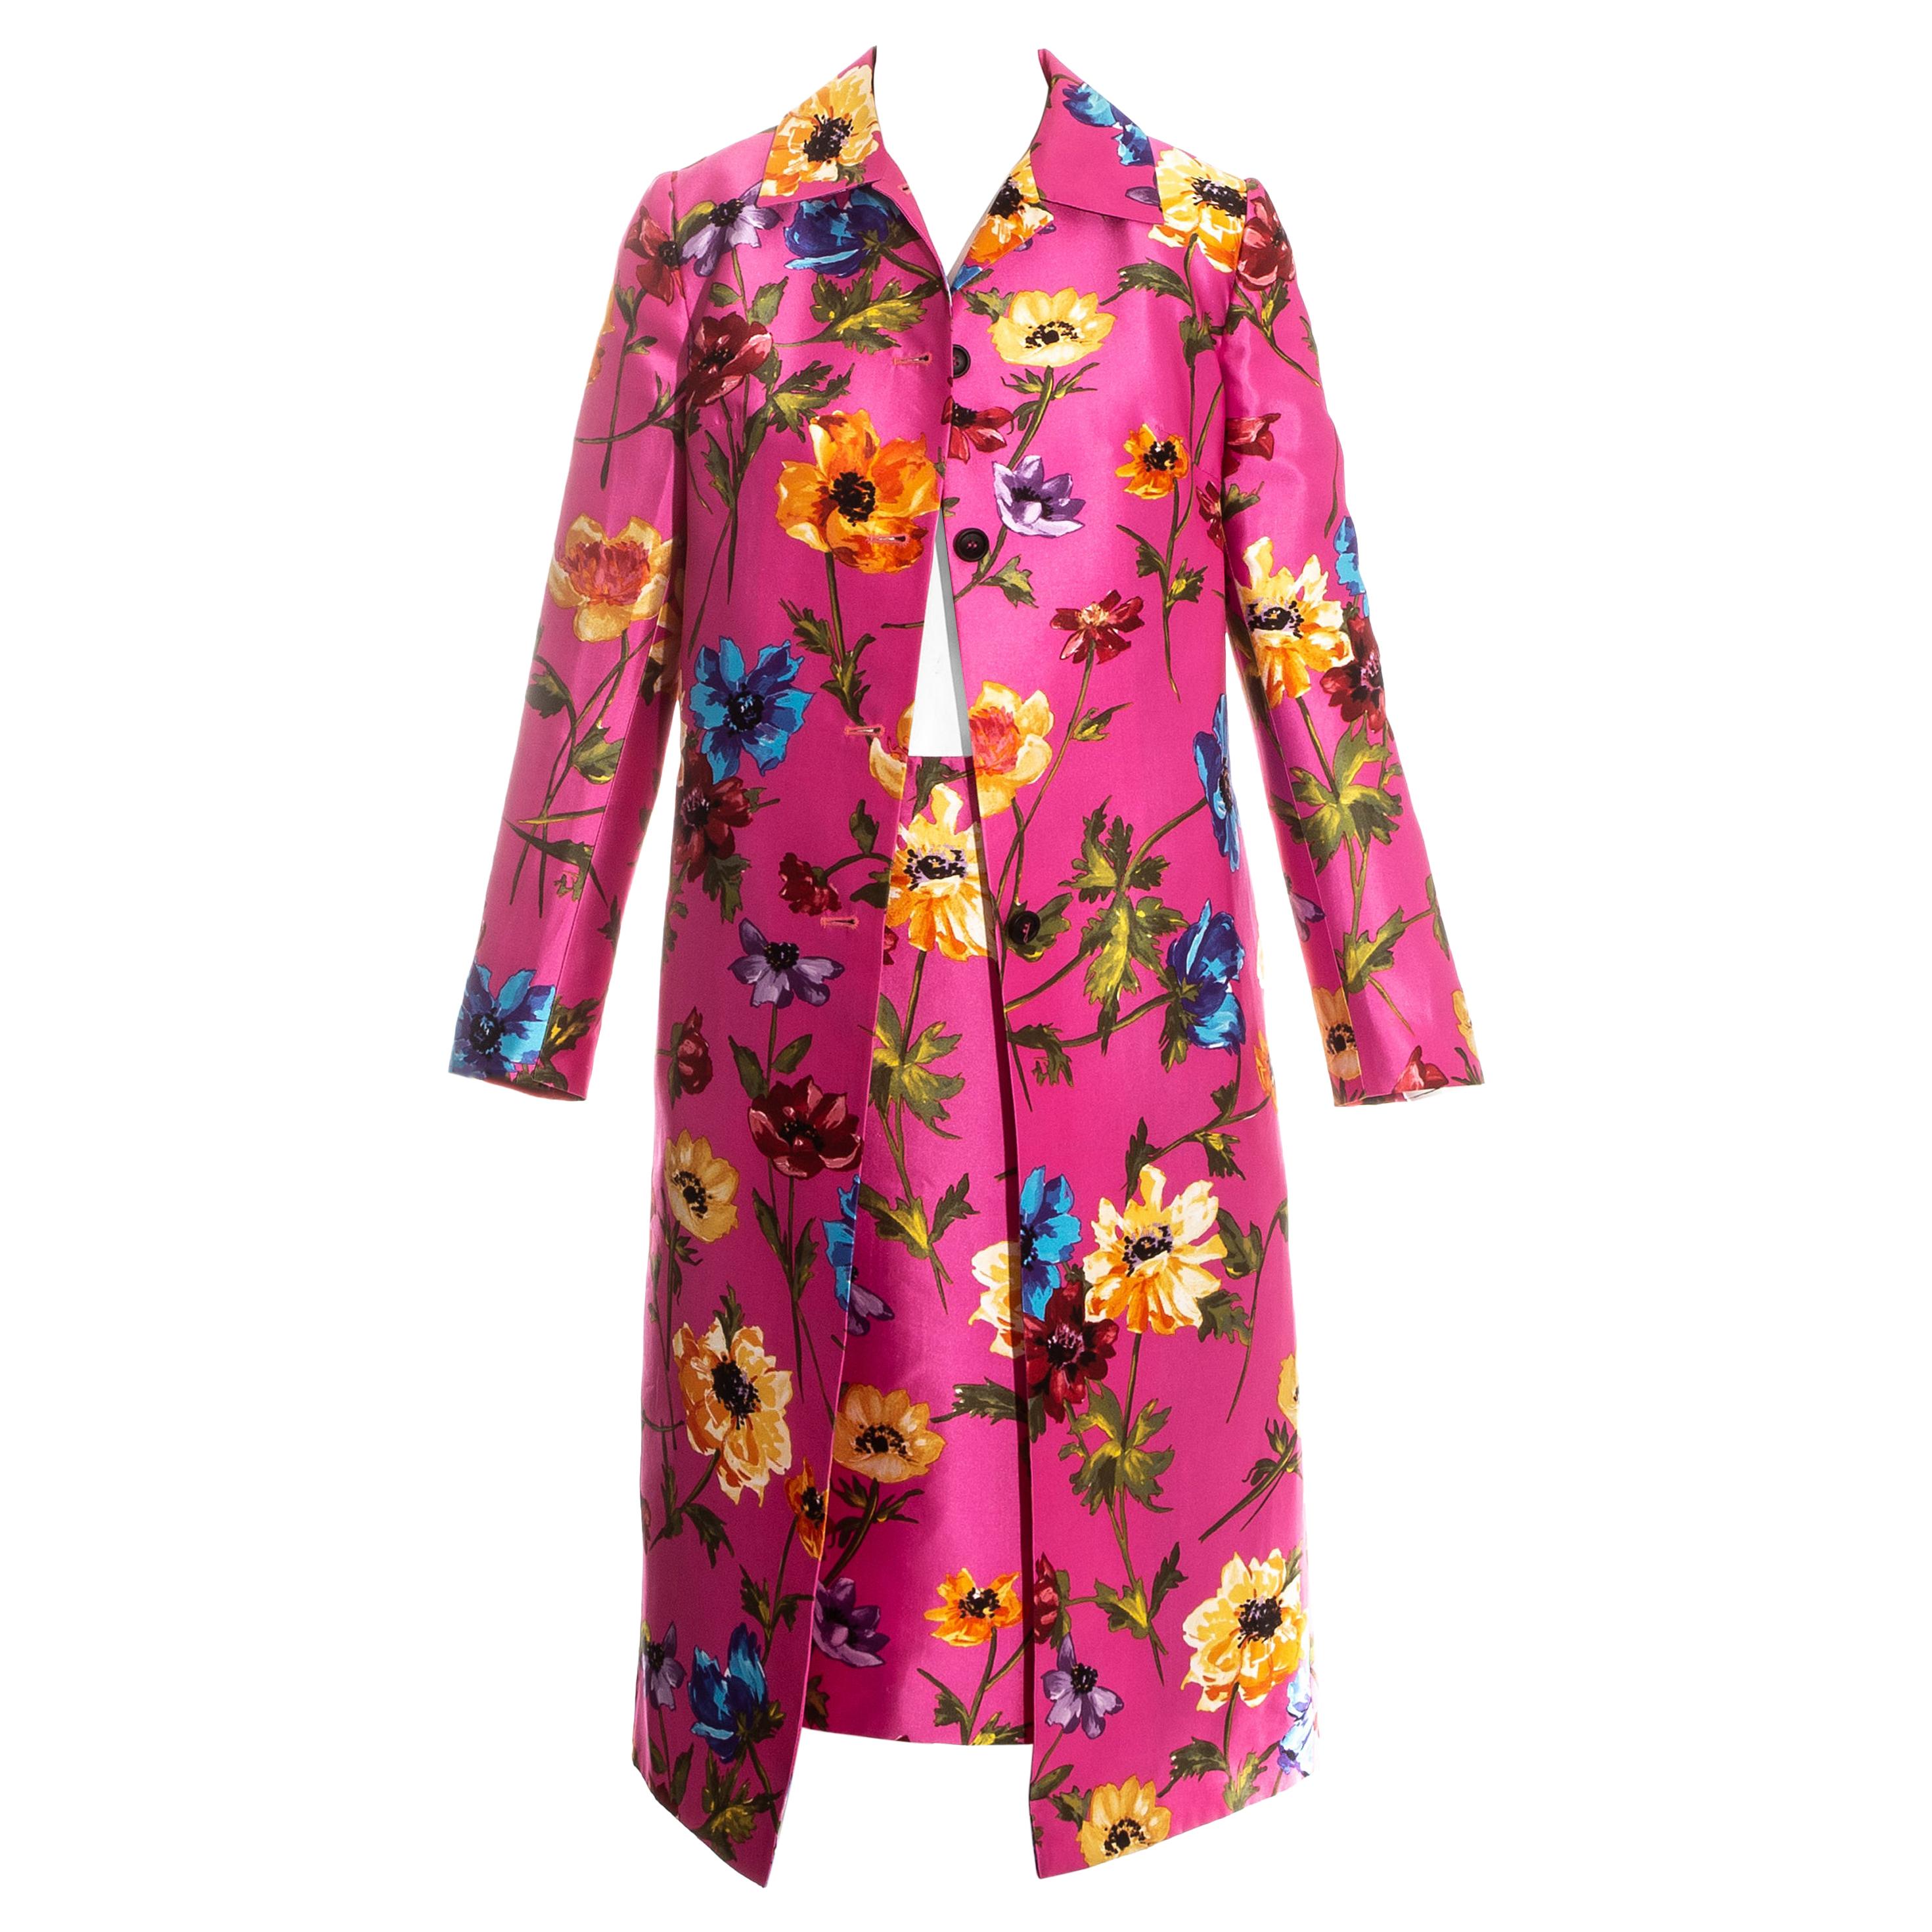 Dolce & Gabbana pink floral silk jacket and skirt ensemble, c. 1990s